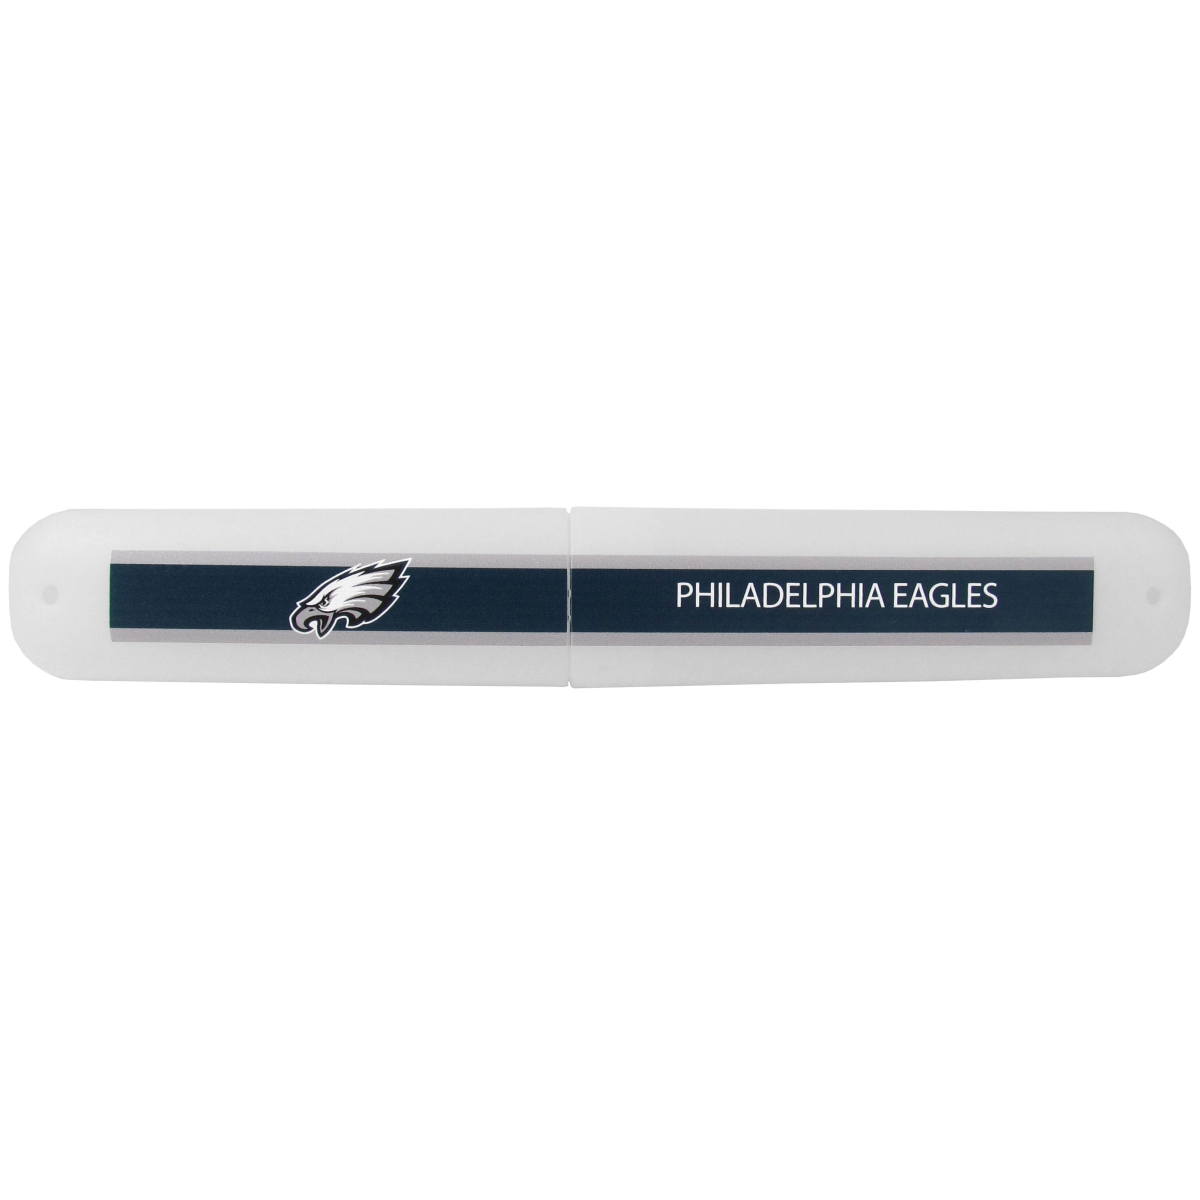 Picture of Siskiyou FTBC065 Unisex NFL Philadelphia Eagles Travel Toothbrush Case - One Size